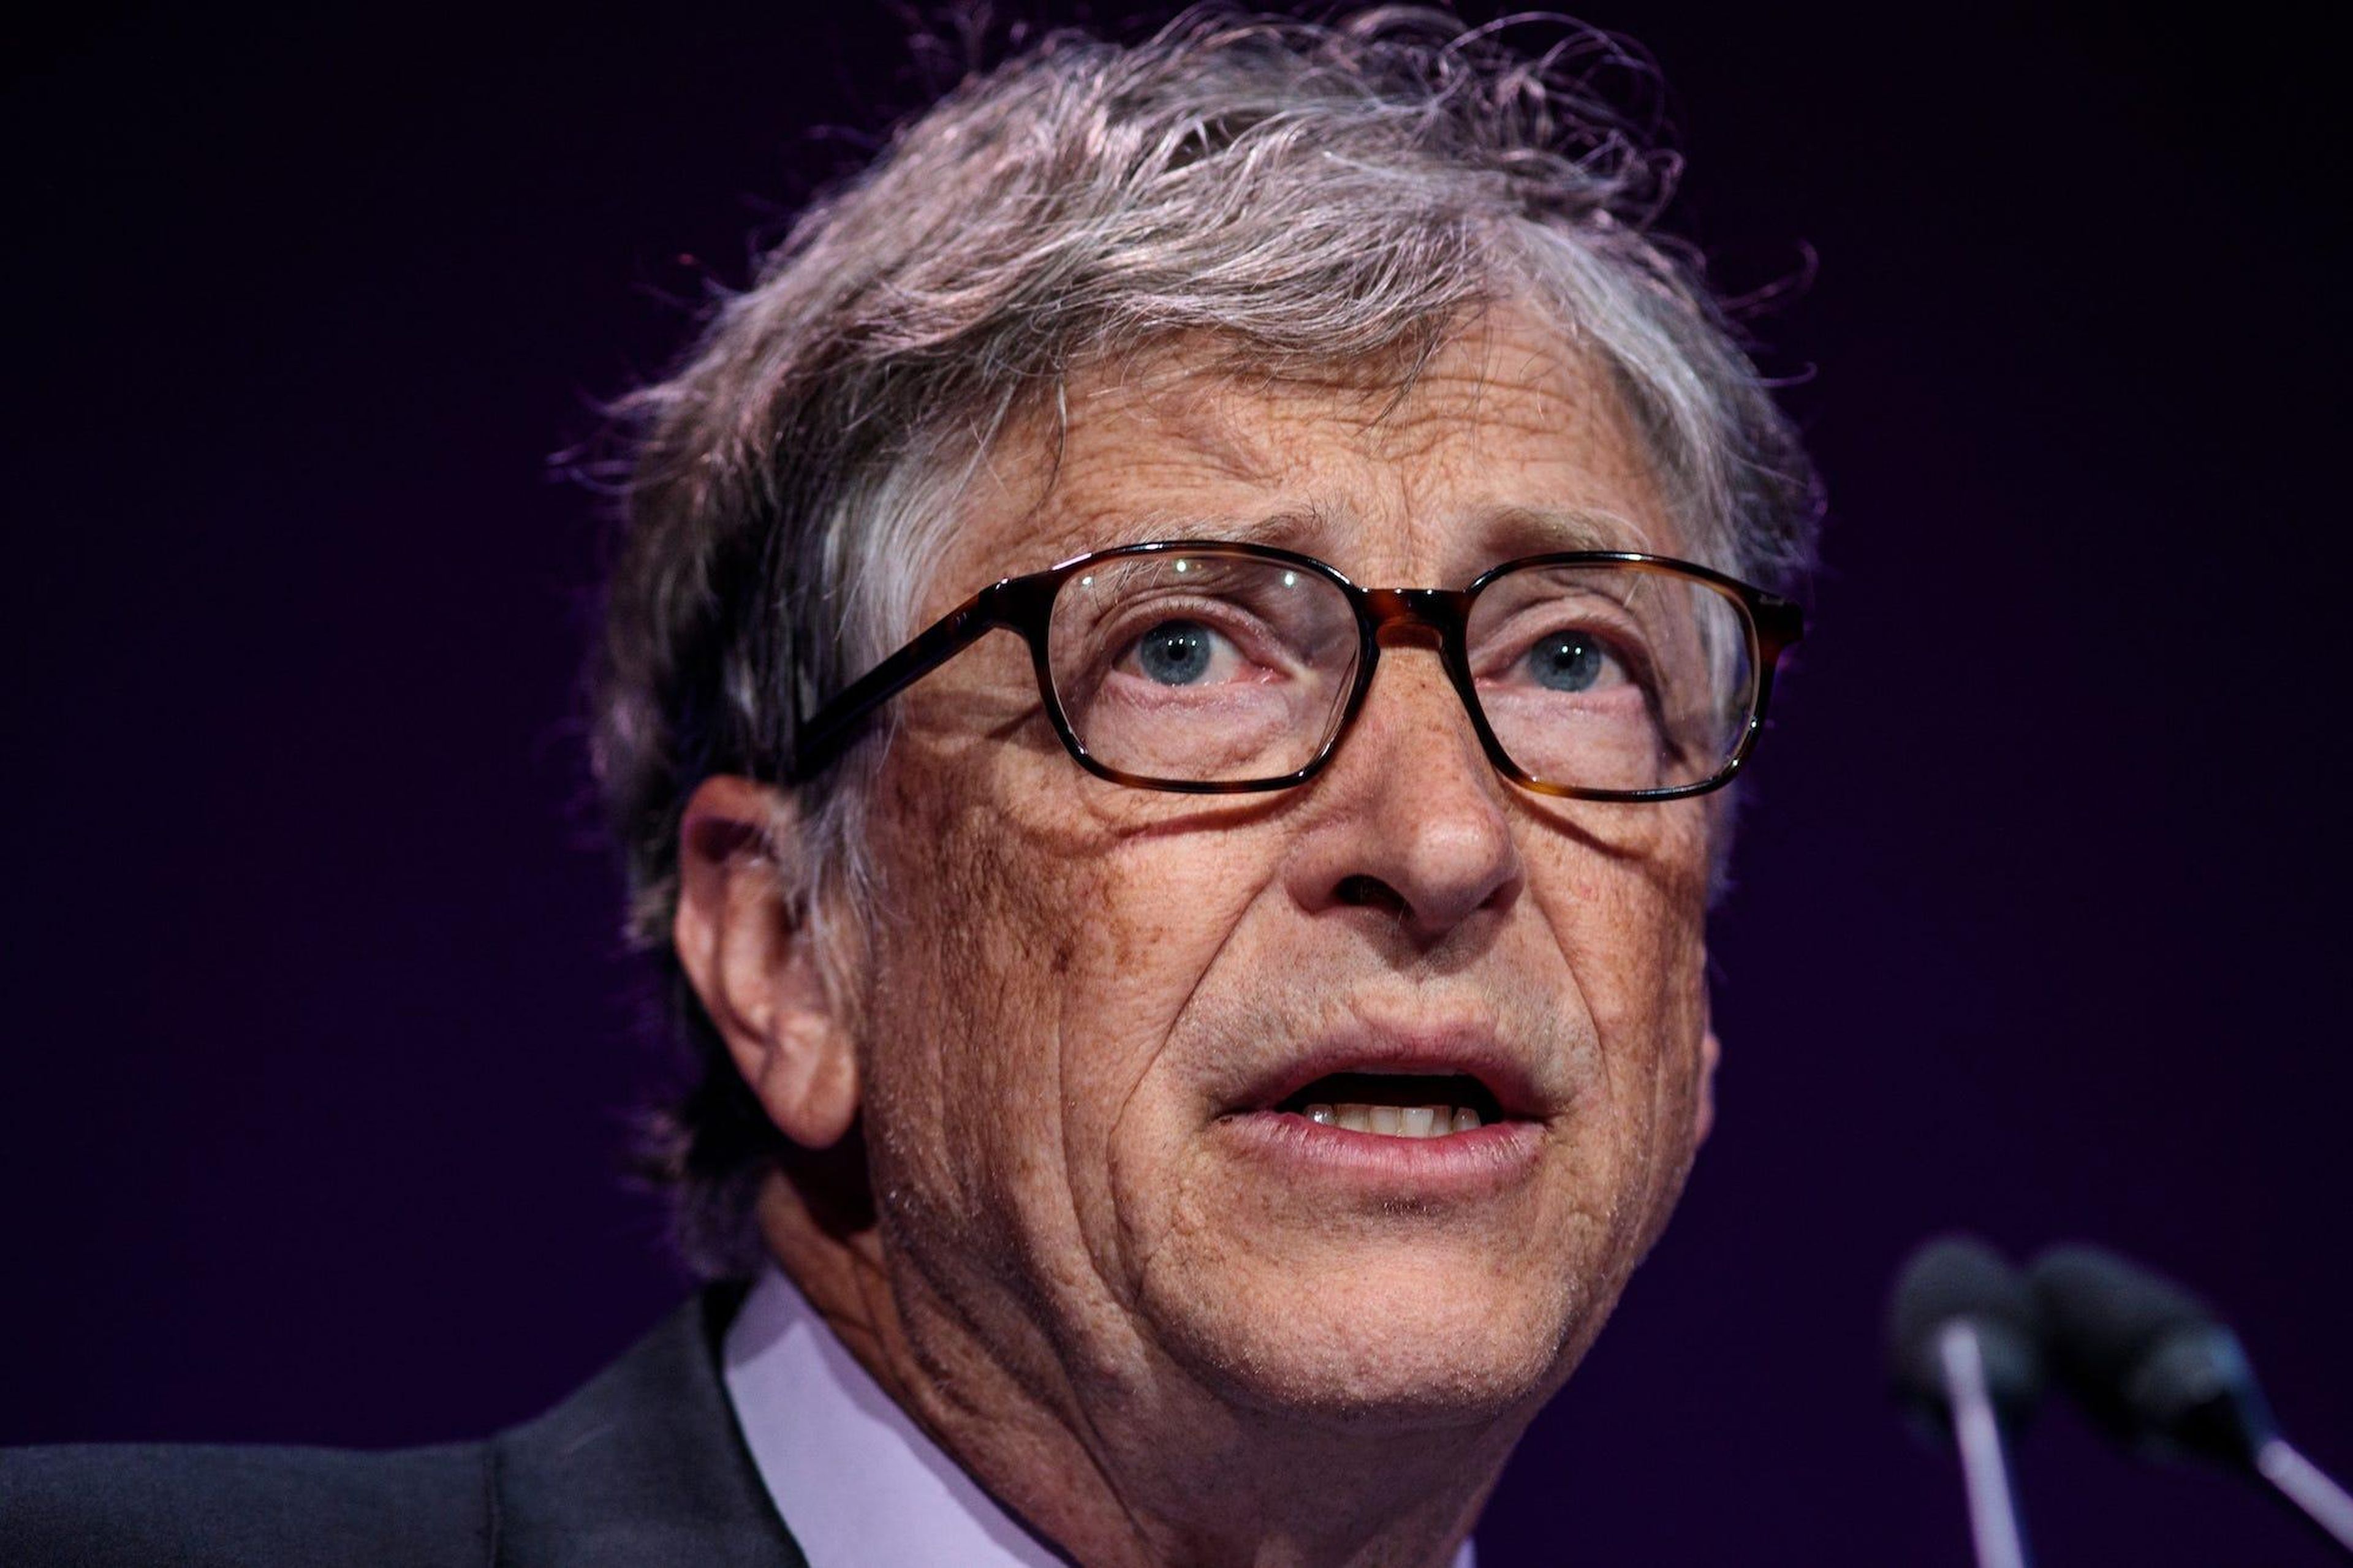 Bill Gates gives a talk at the Malaria Summit in London, UK, in April 2018.